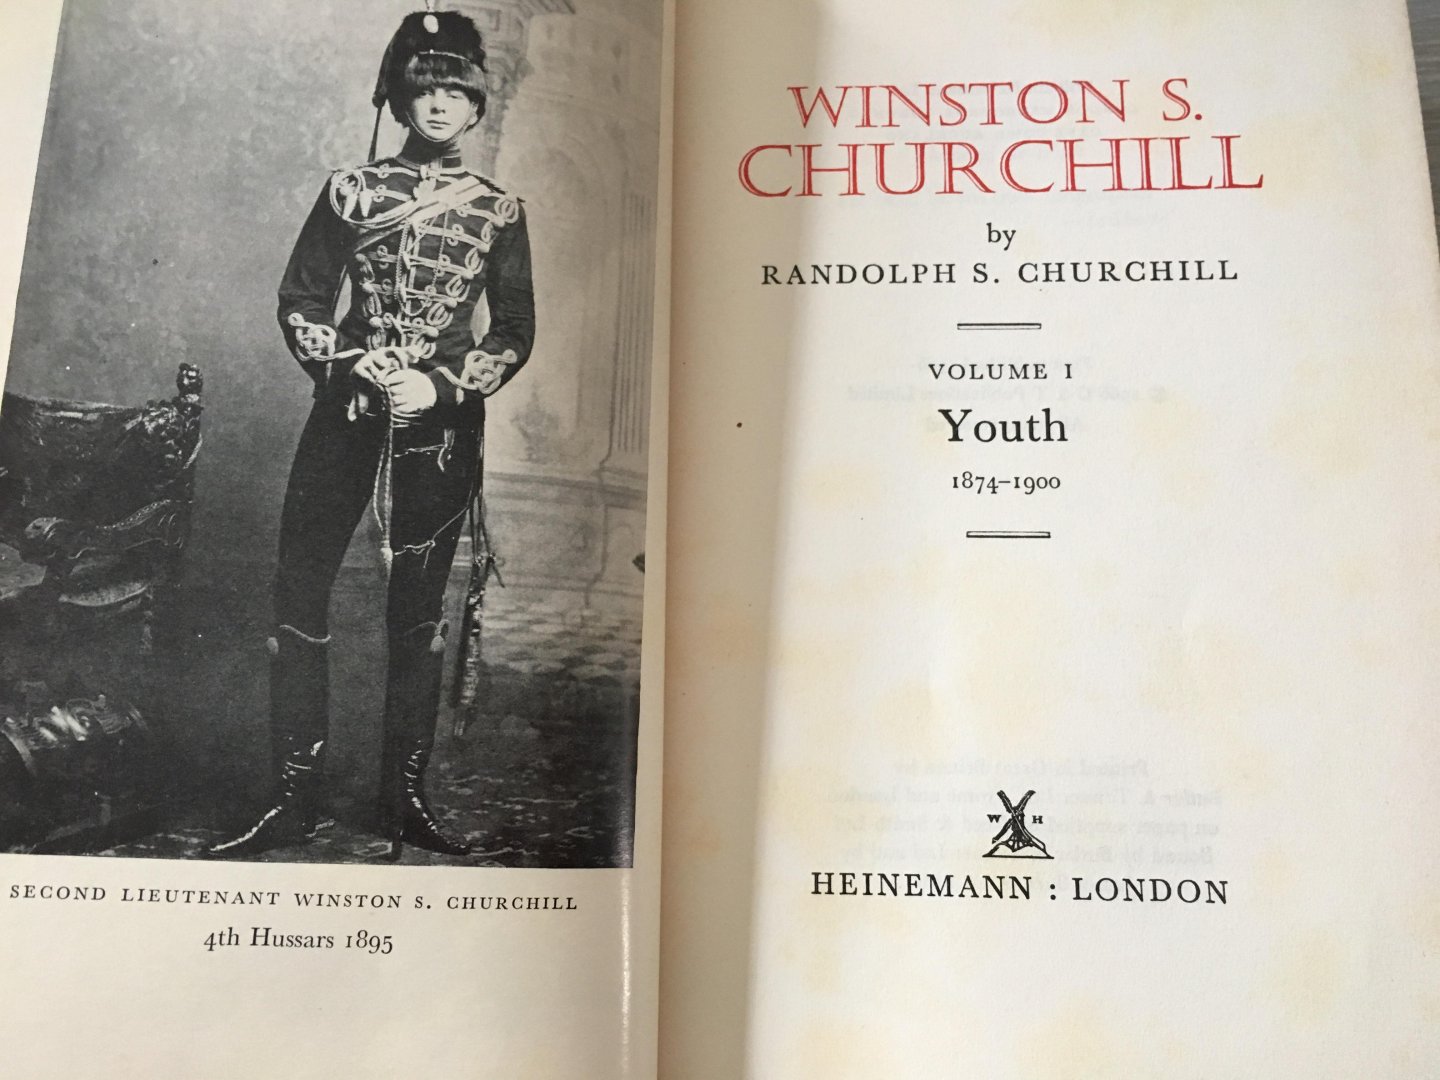 Randolph S. Churchill - WINSTON S. CHURCHILL - YOUTH 1874-1900